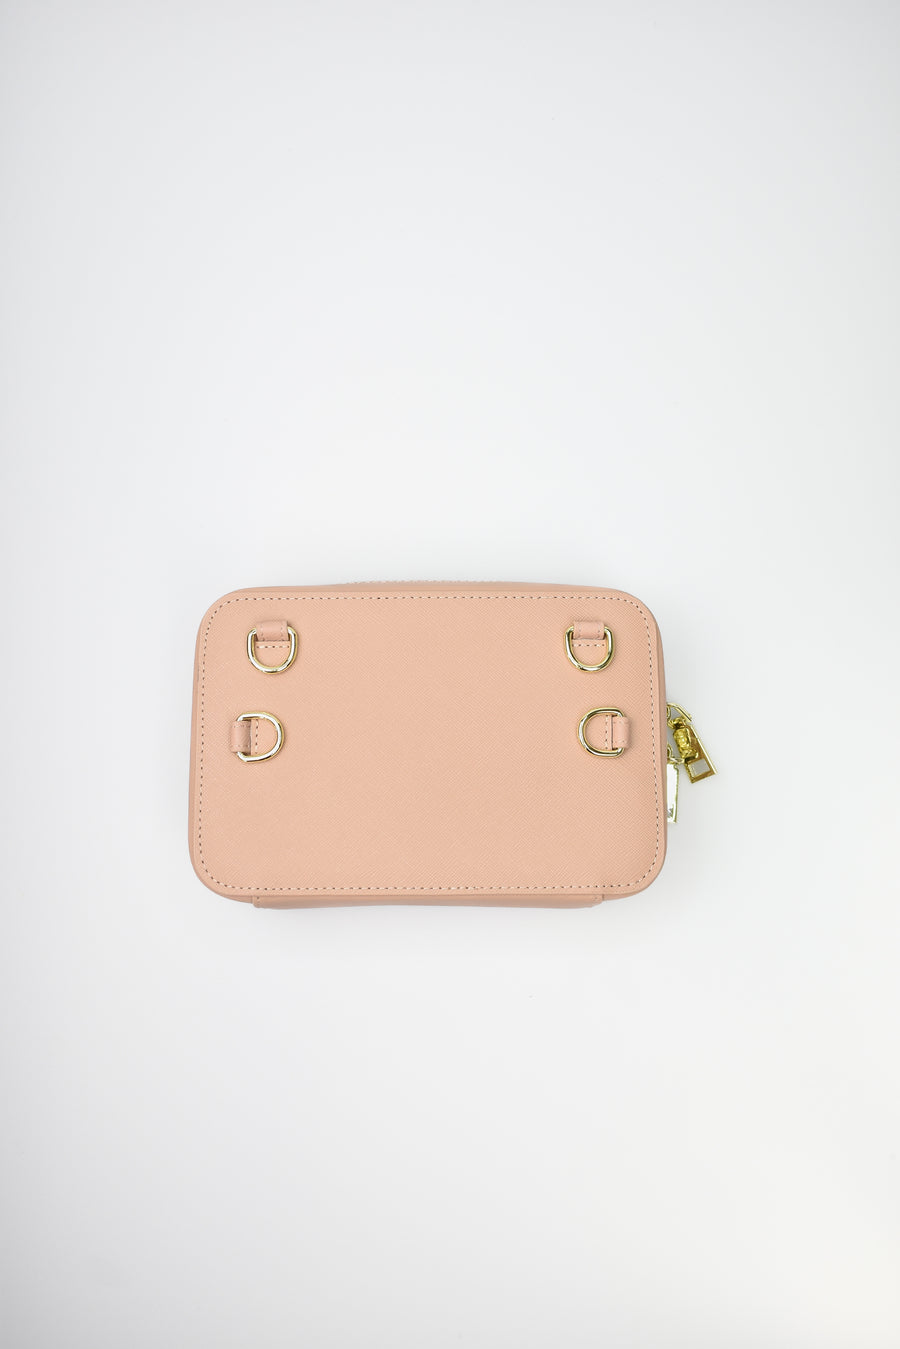 Personalised Leather Handbag & Crossbody Bag - Sandy Beige